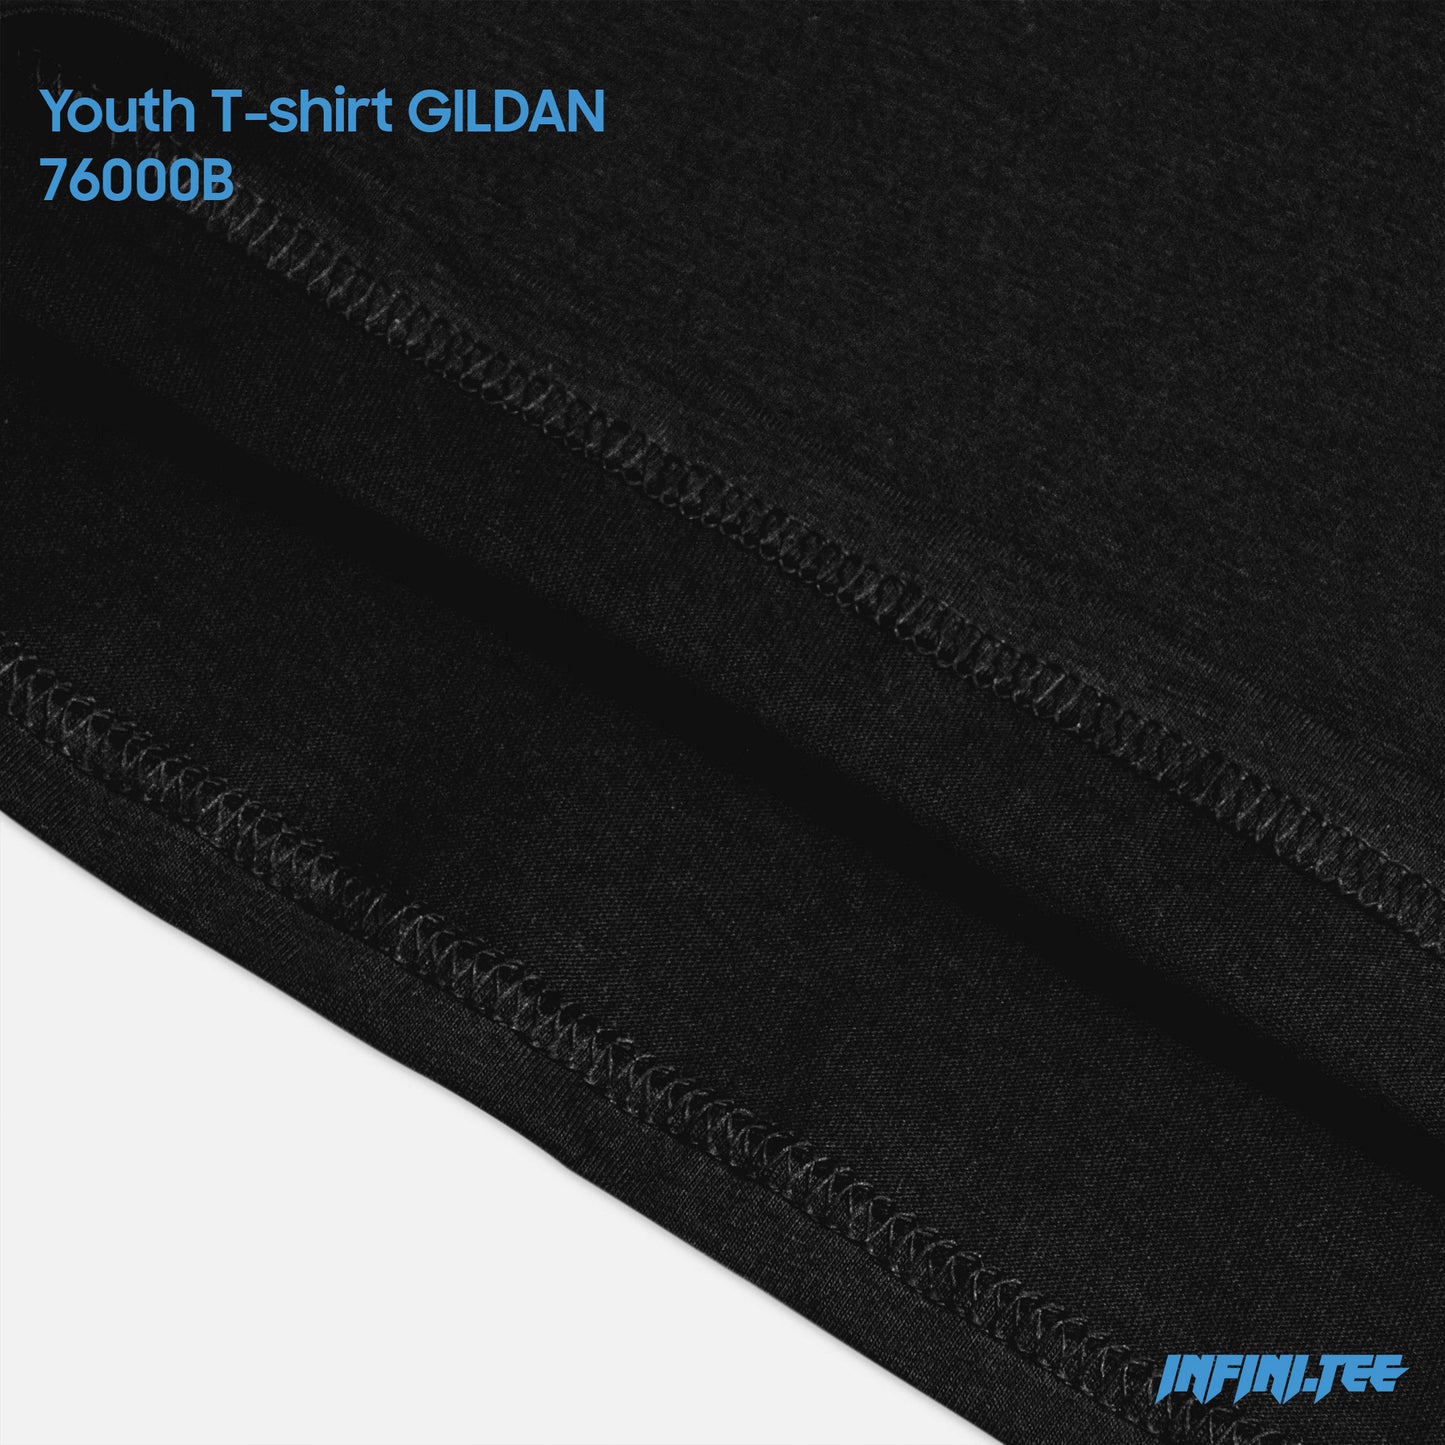 Youth T-shirt 76000B GILDAN - BLACK